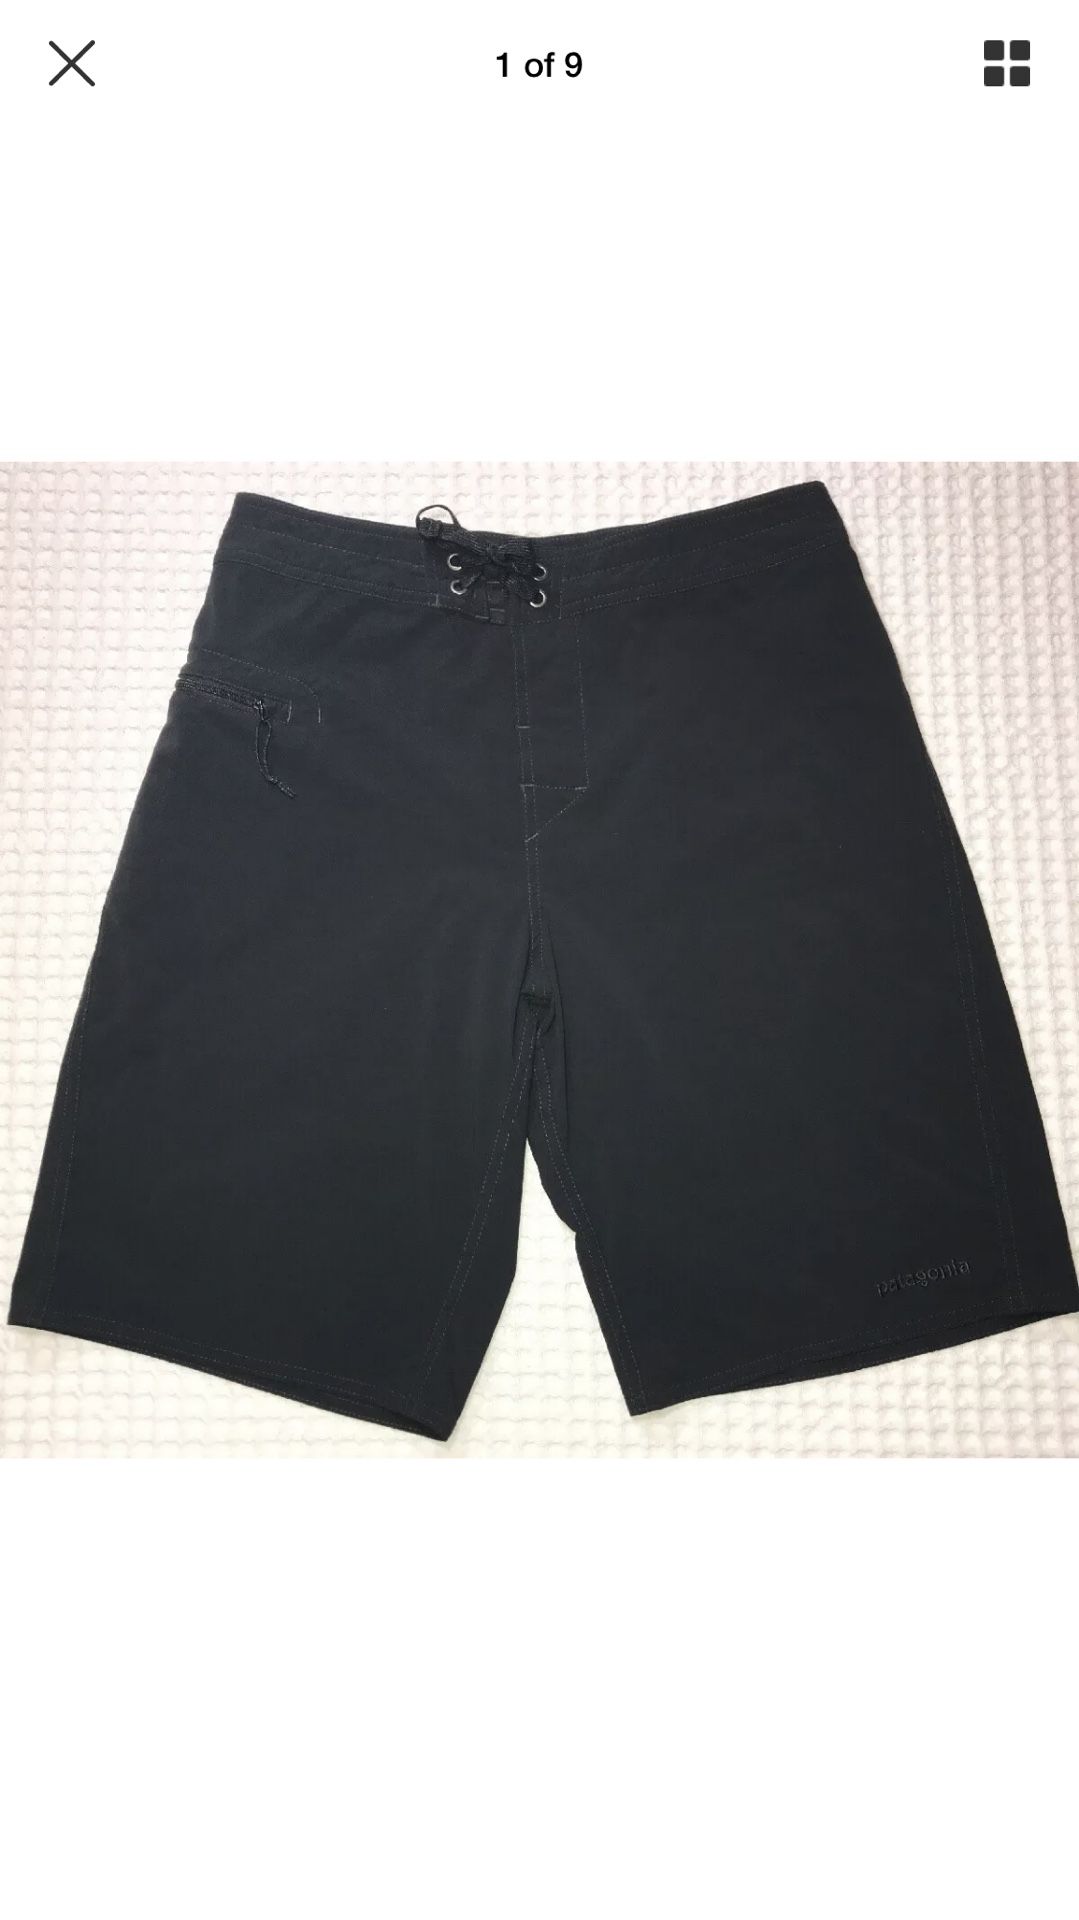 Patagonia men’s board shorts black size 30